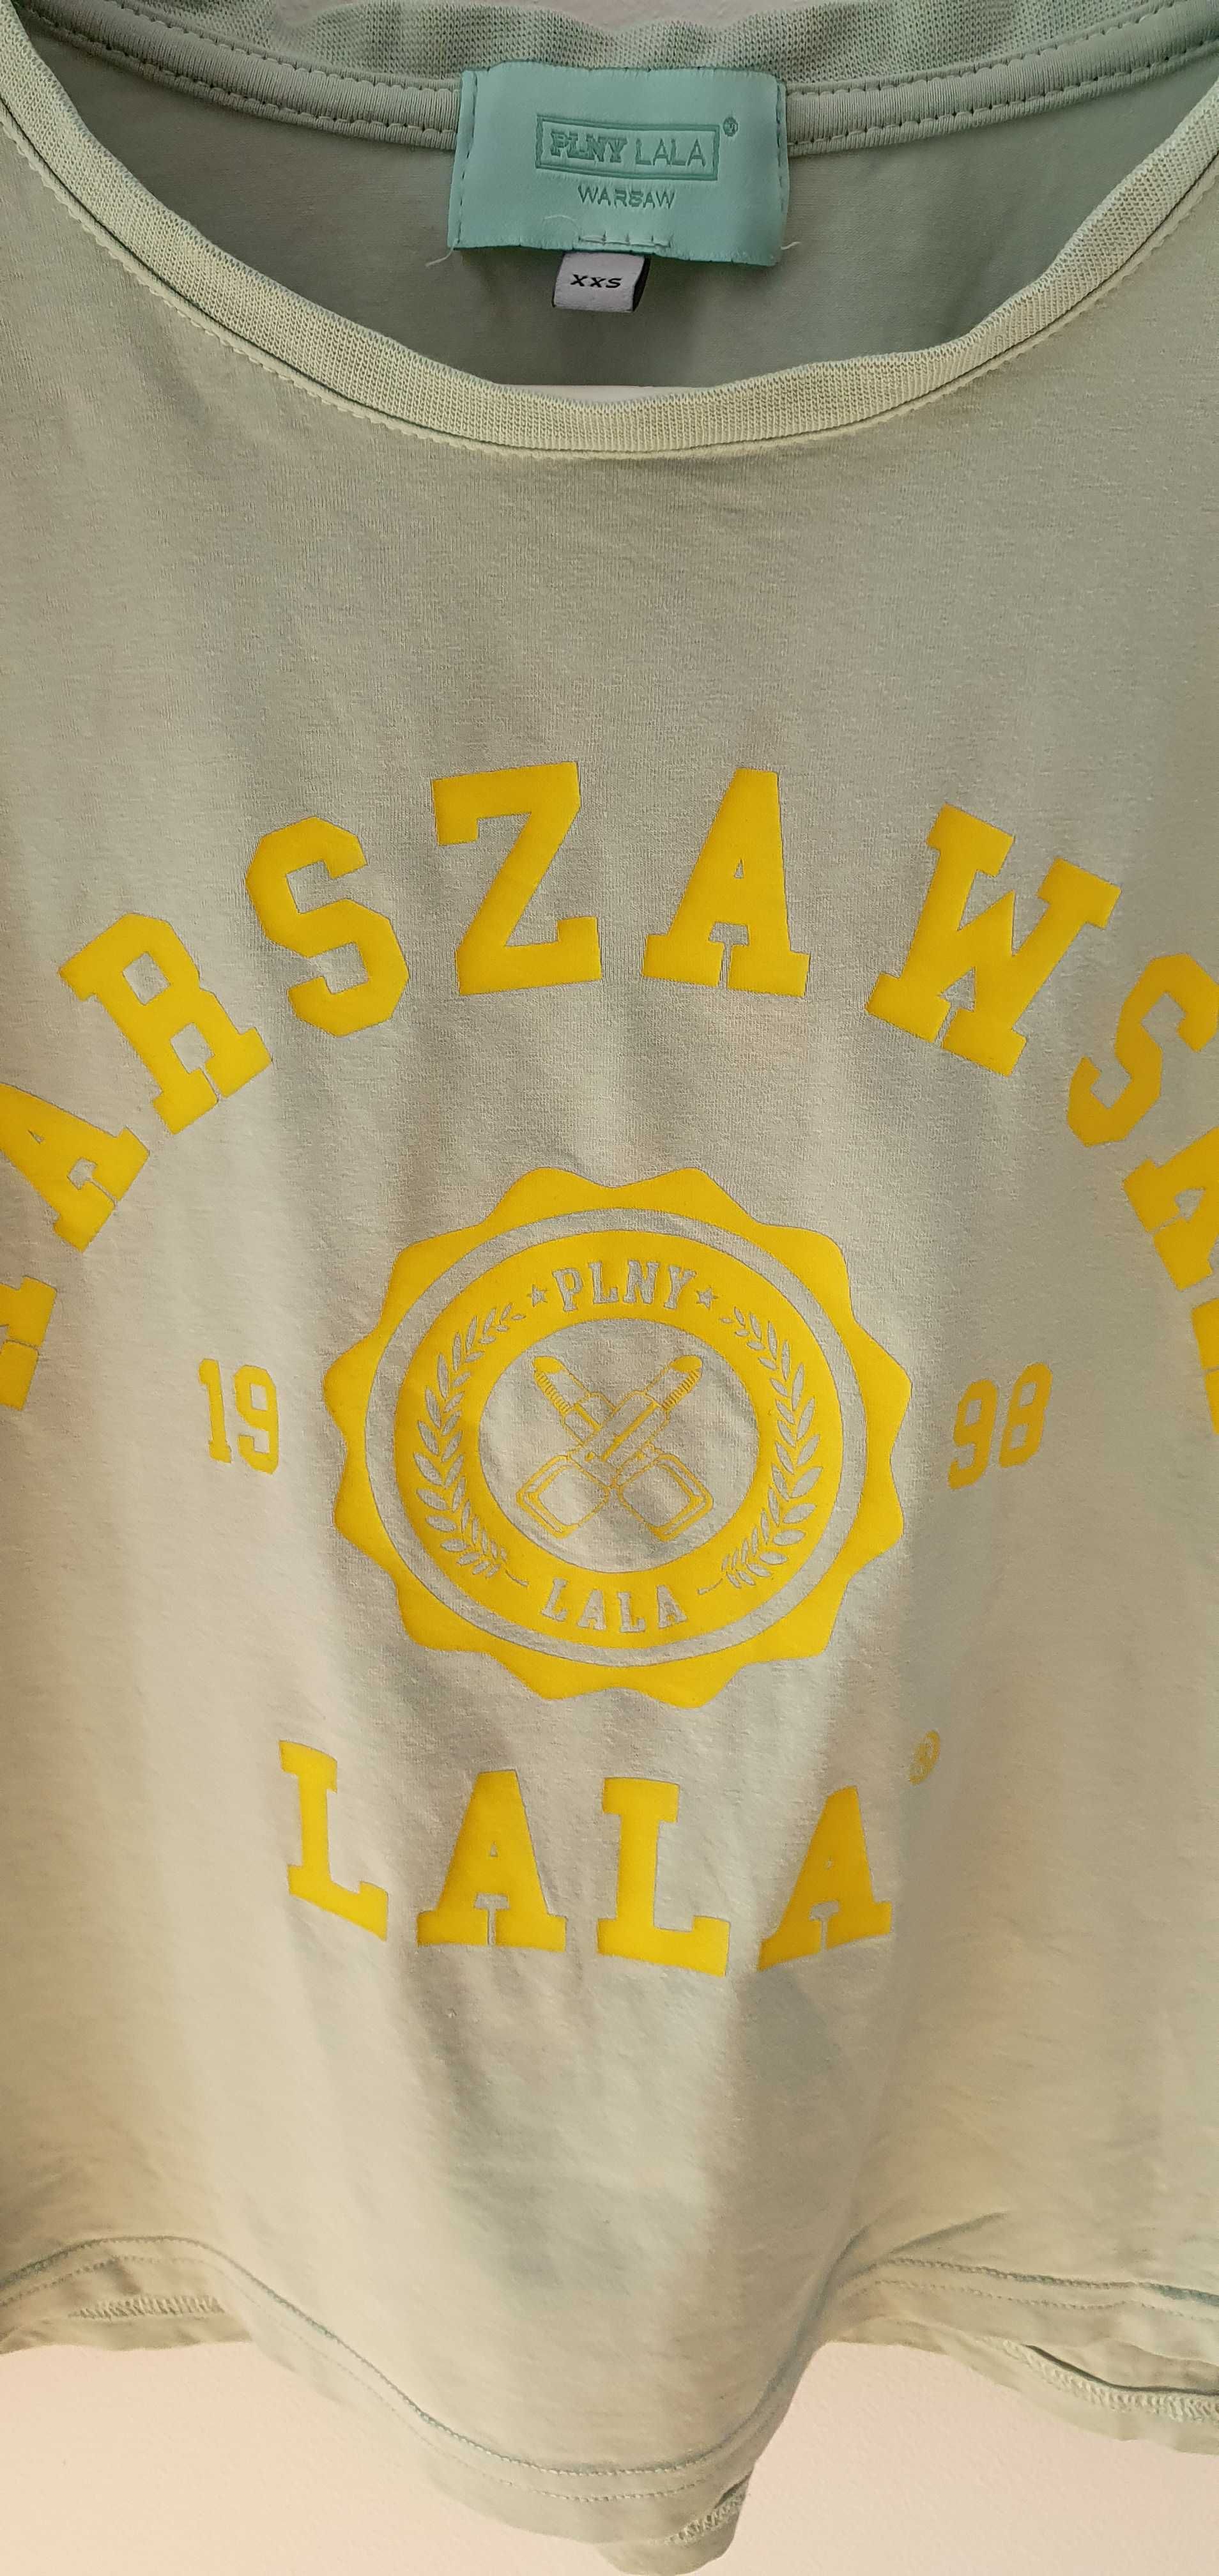 Koszulka PLNY Lala T shirt miętowy Warszawska Lala st bdb